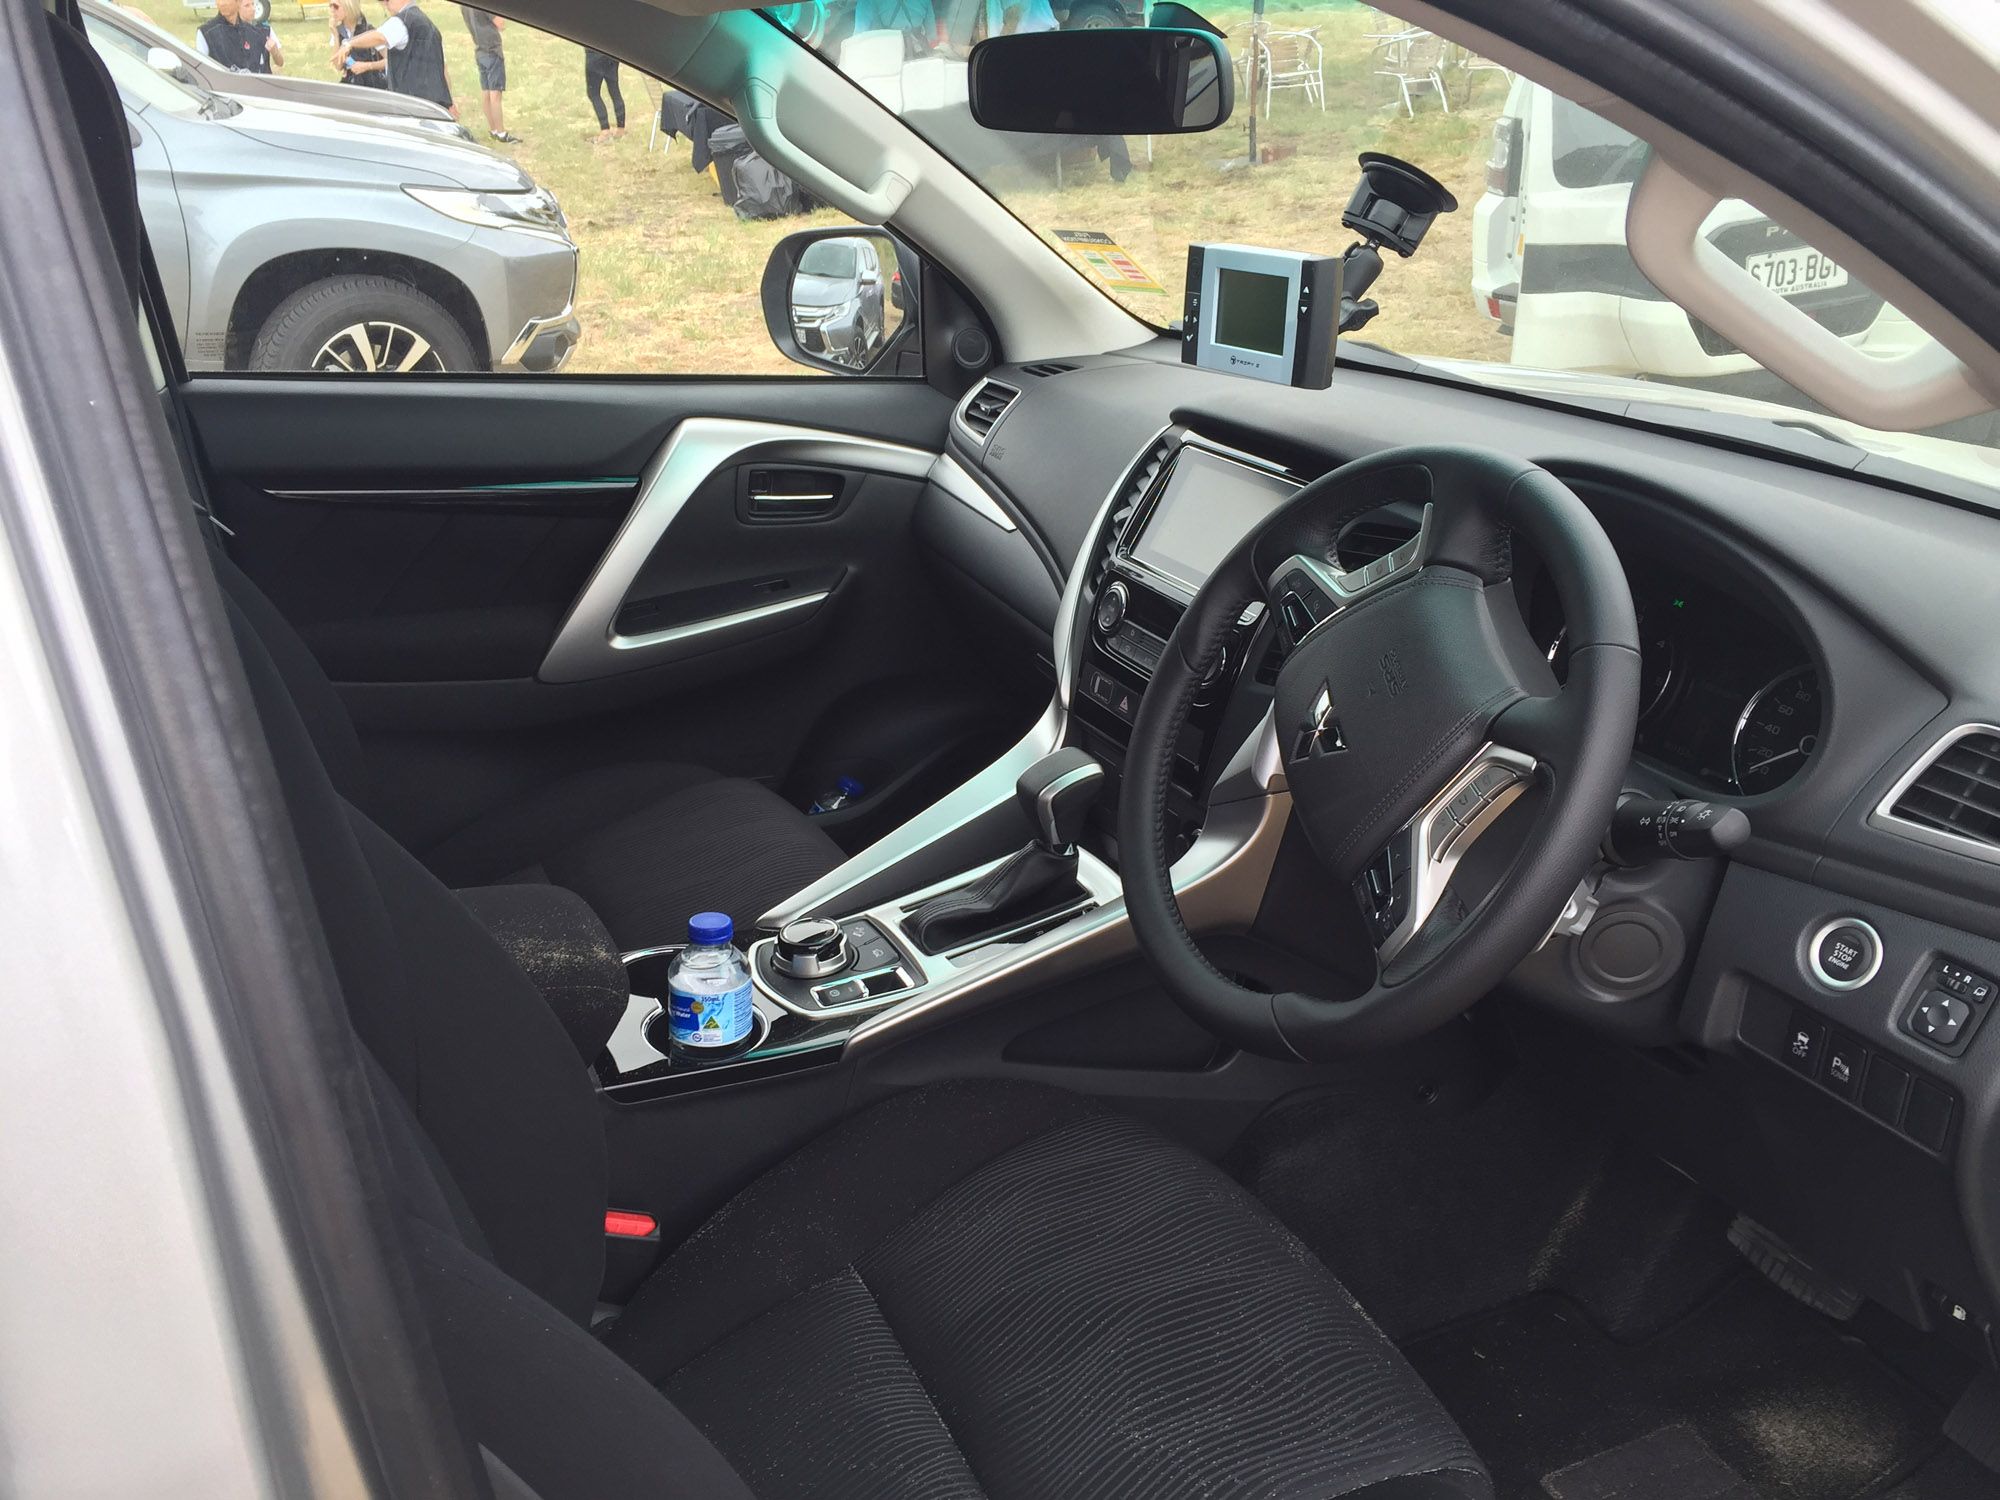 2016 Mitsubishi Pajero Sport Cockpit Interior (View 15 of 23)